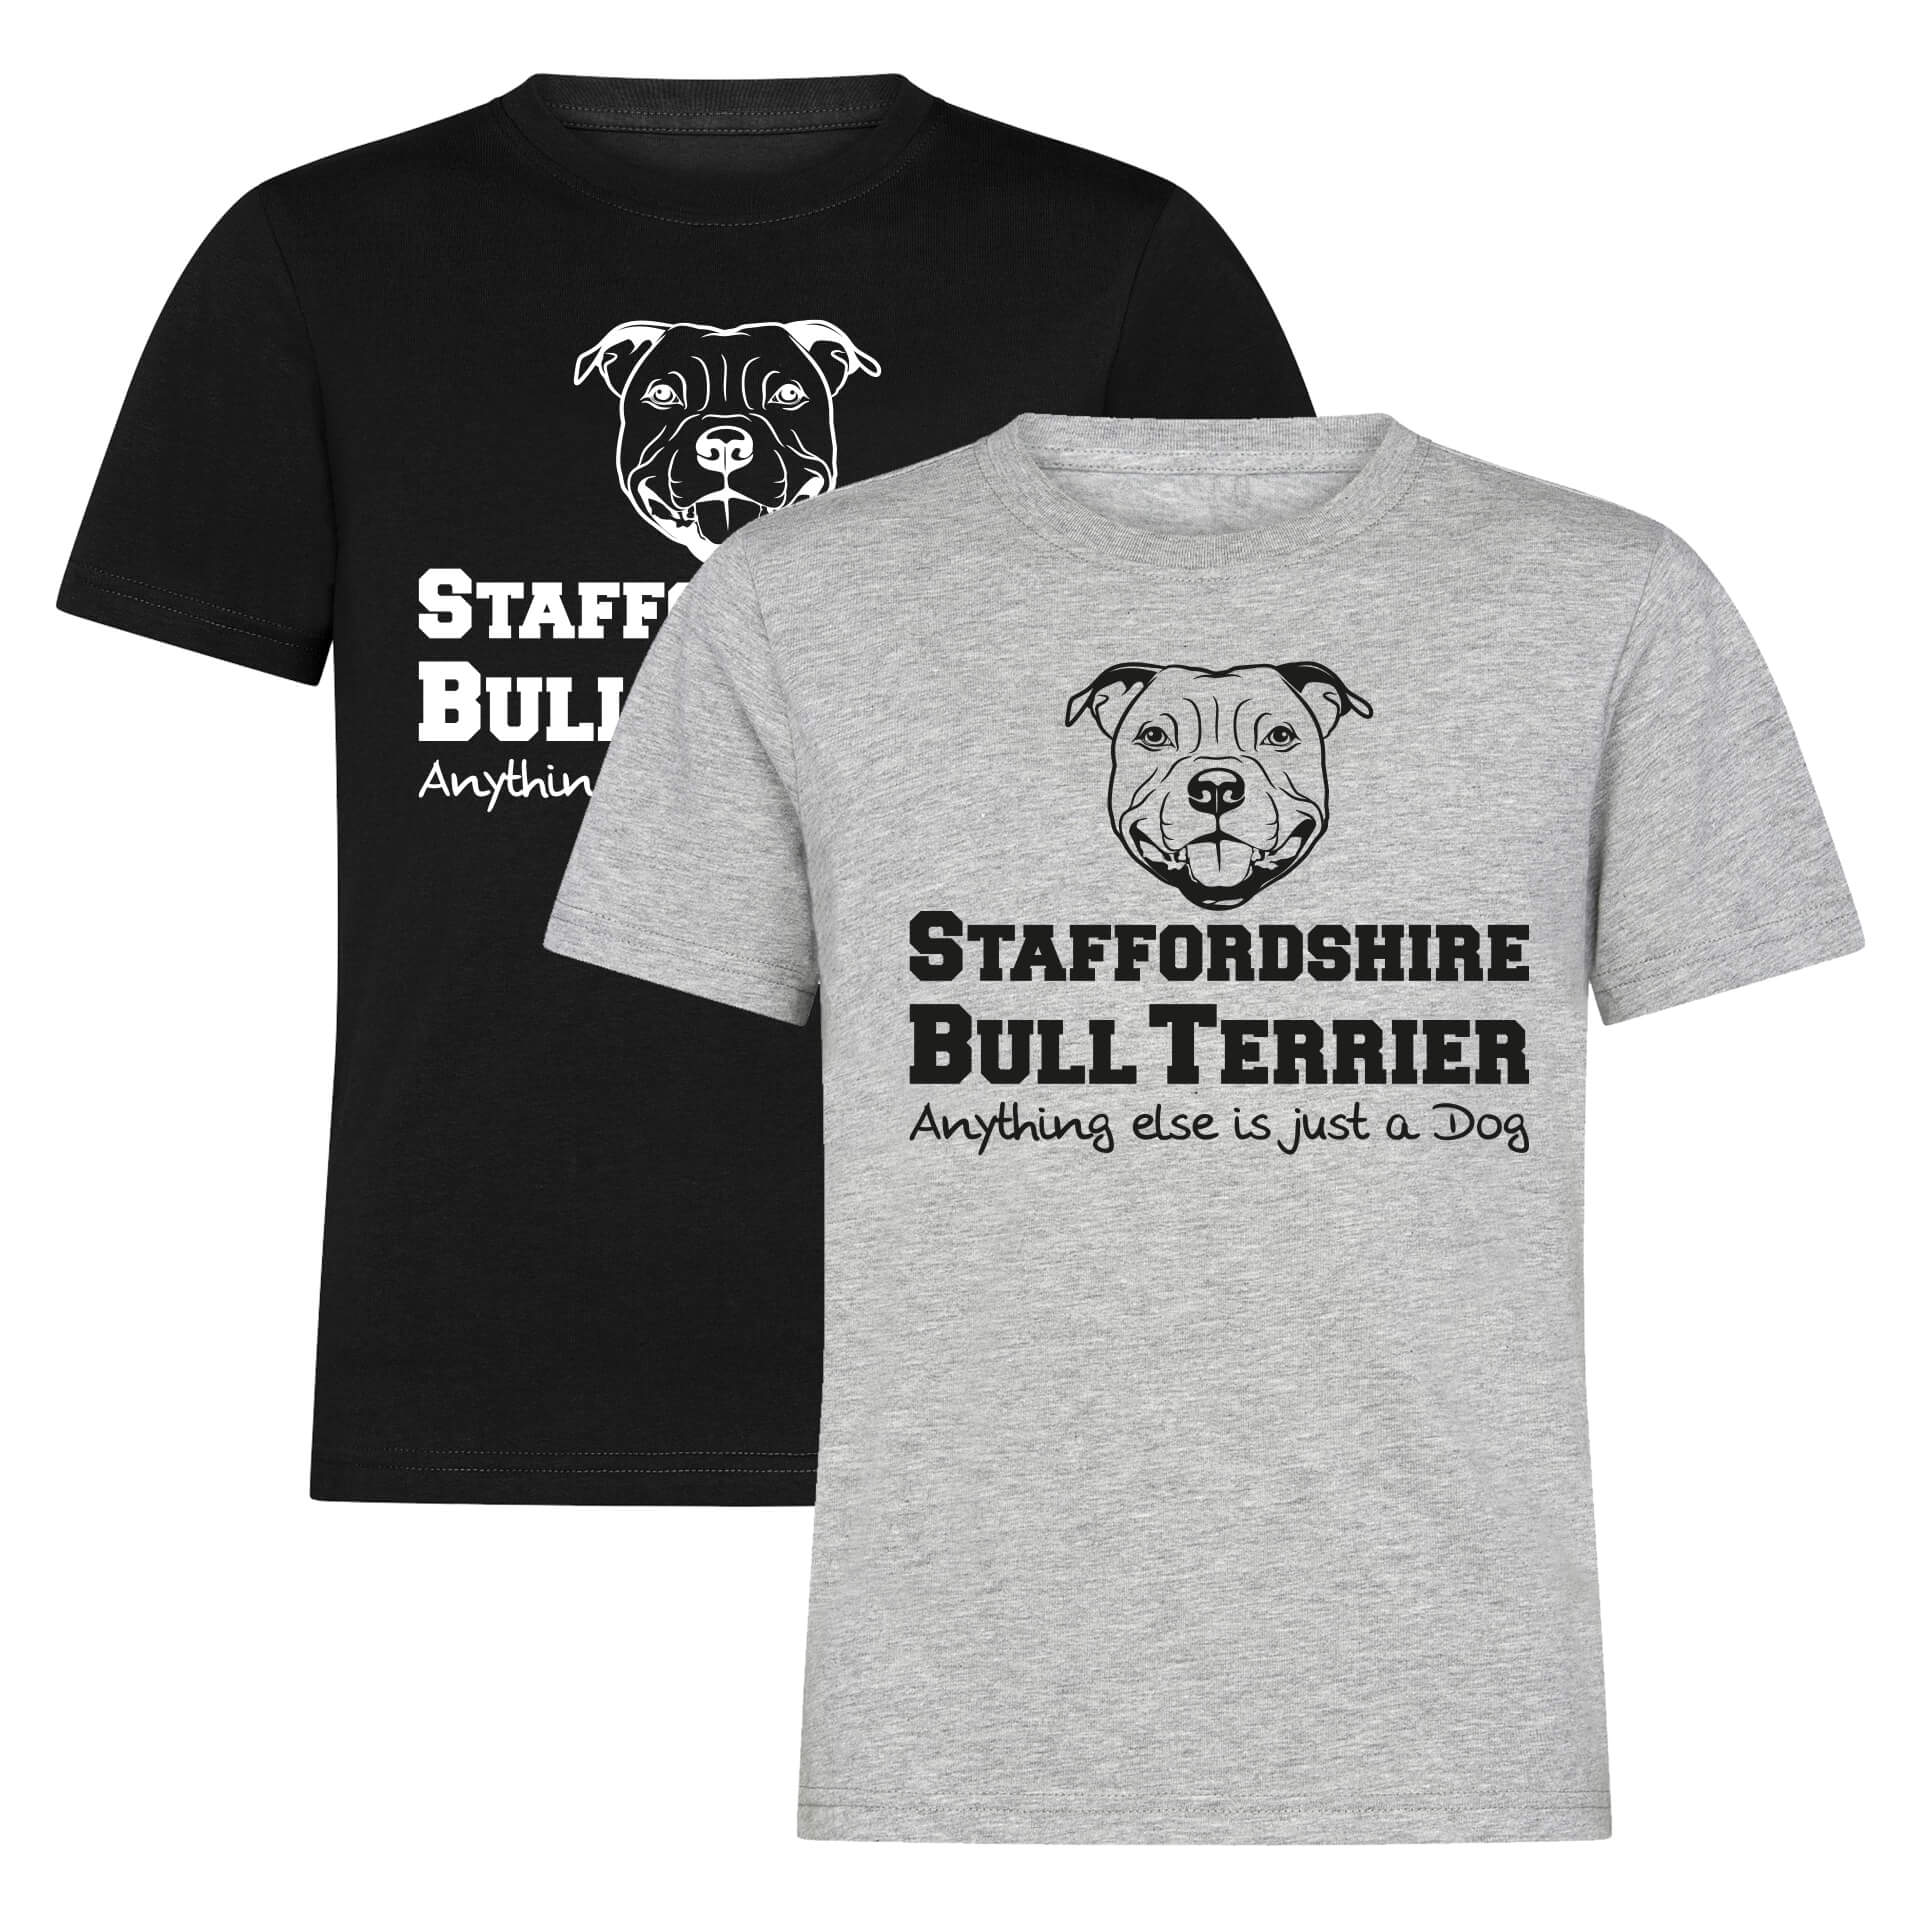 Staffordshire Bullterrier T-Shirt Any